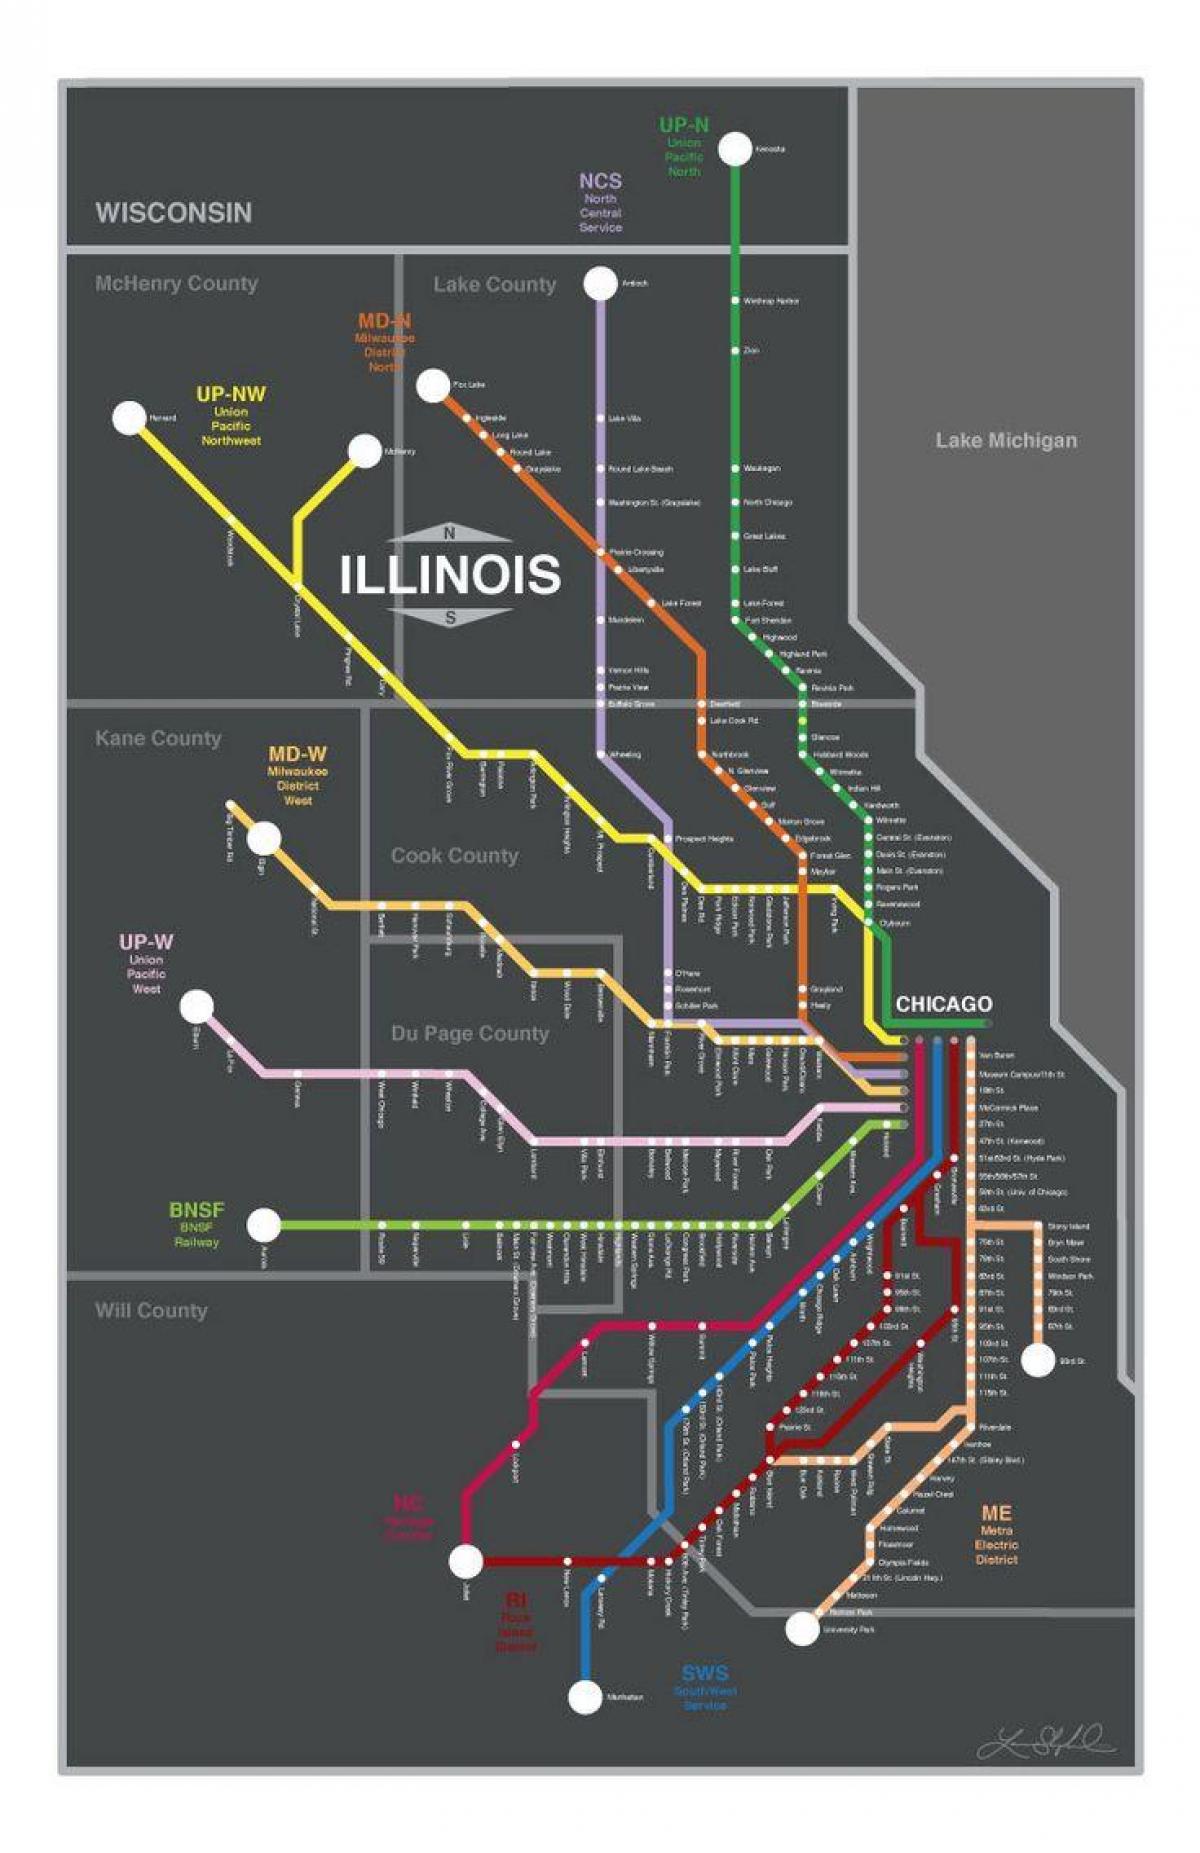 metra tog kort Chicago